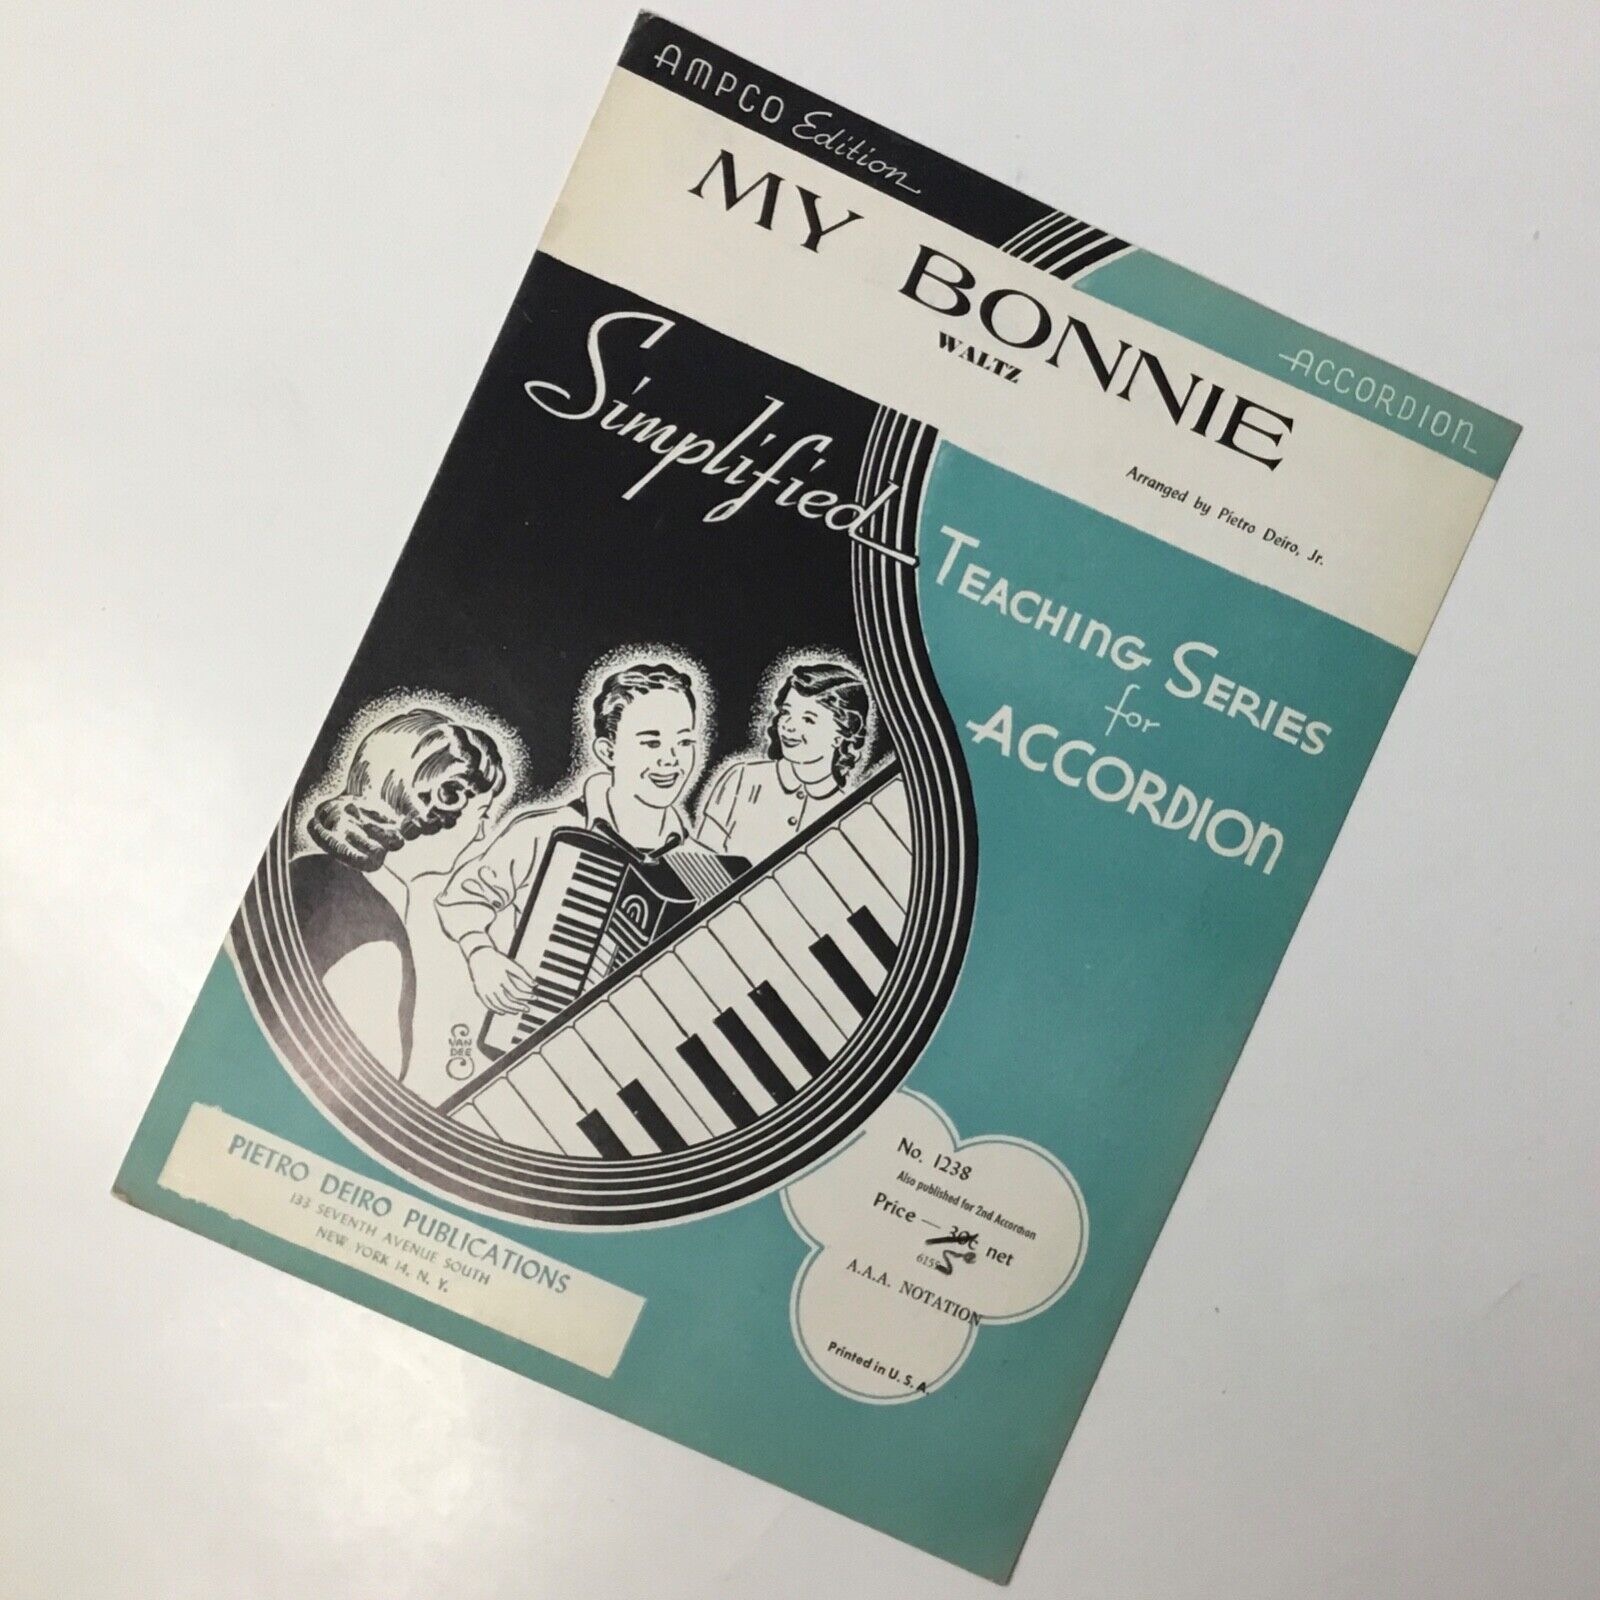 My Bonnie Waltz Sheet Music 1951 Simplified Teaching Series for Accordion Piano